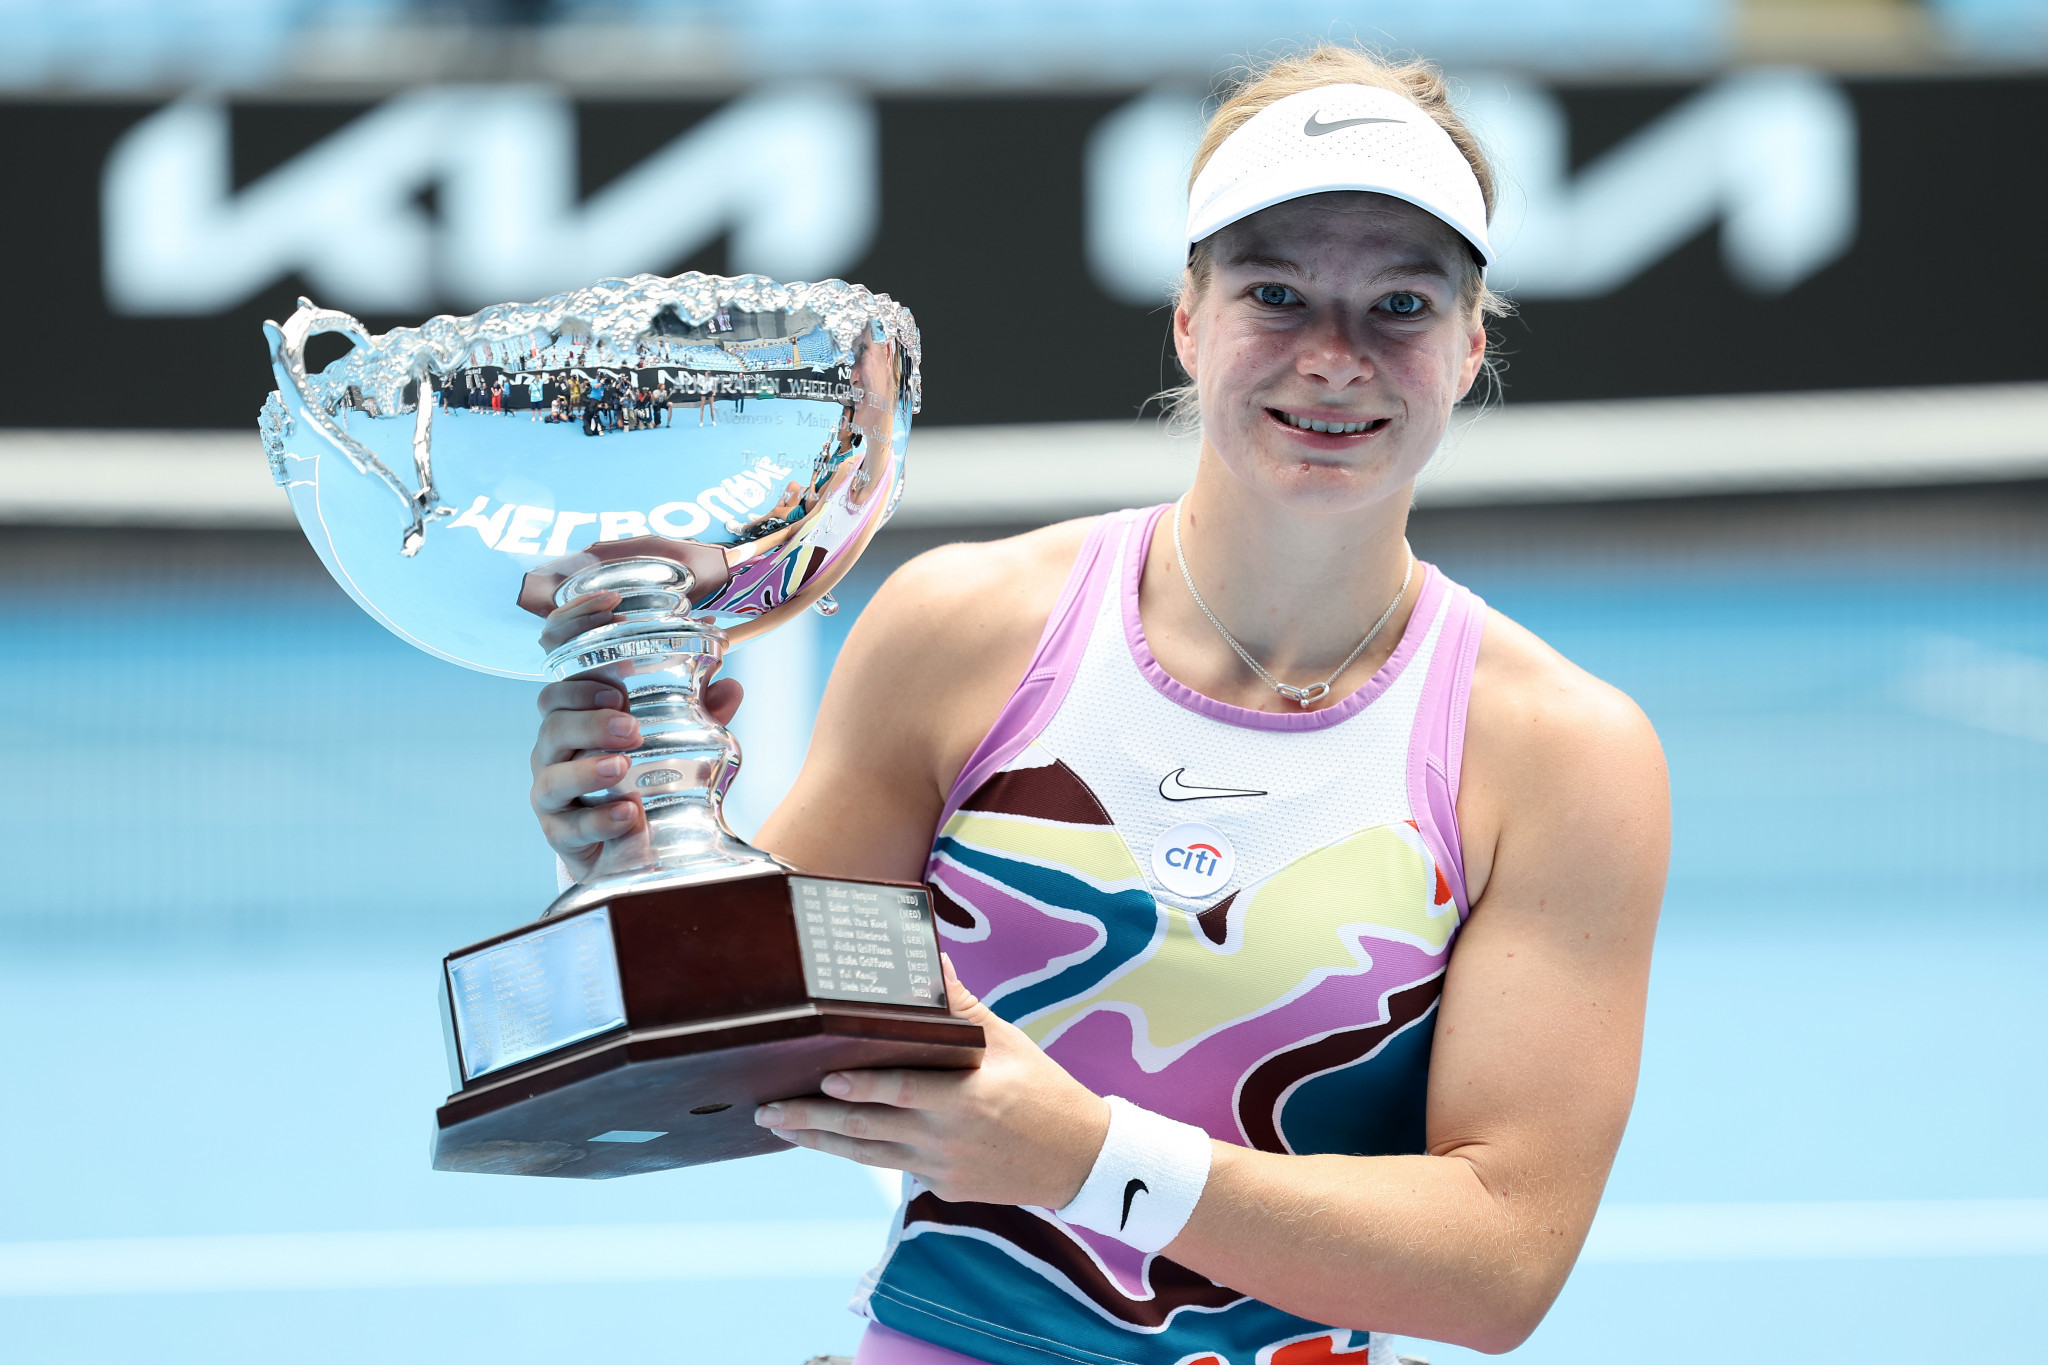 De Groot wins ninth straight Grand Slam singles title with Australian Open crown